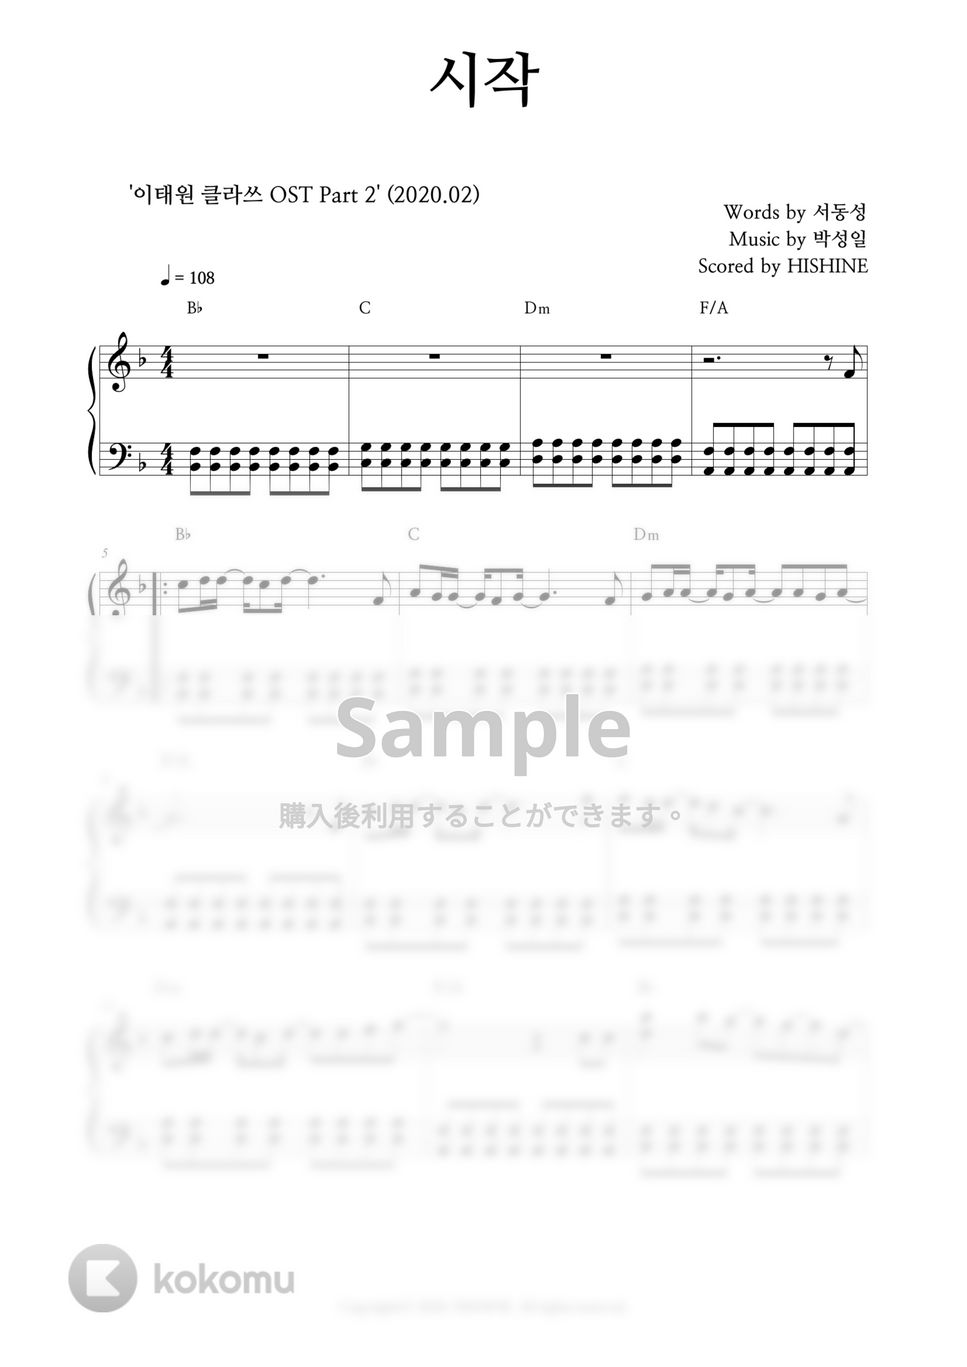 Gaho - 始まり(梨泰院クラス OST) (Easy Key.) by HISHINE